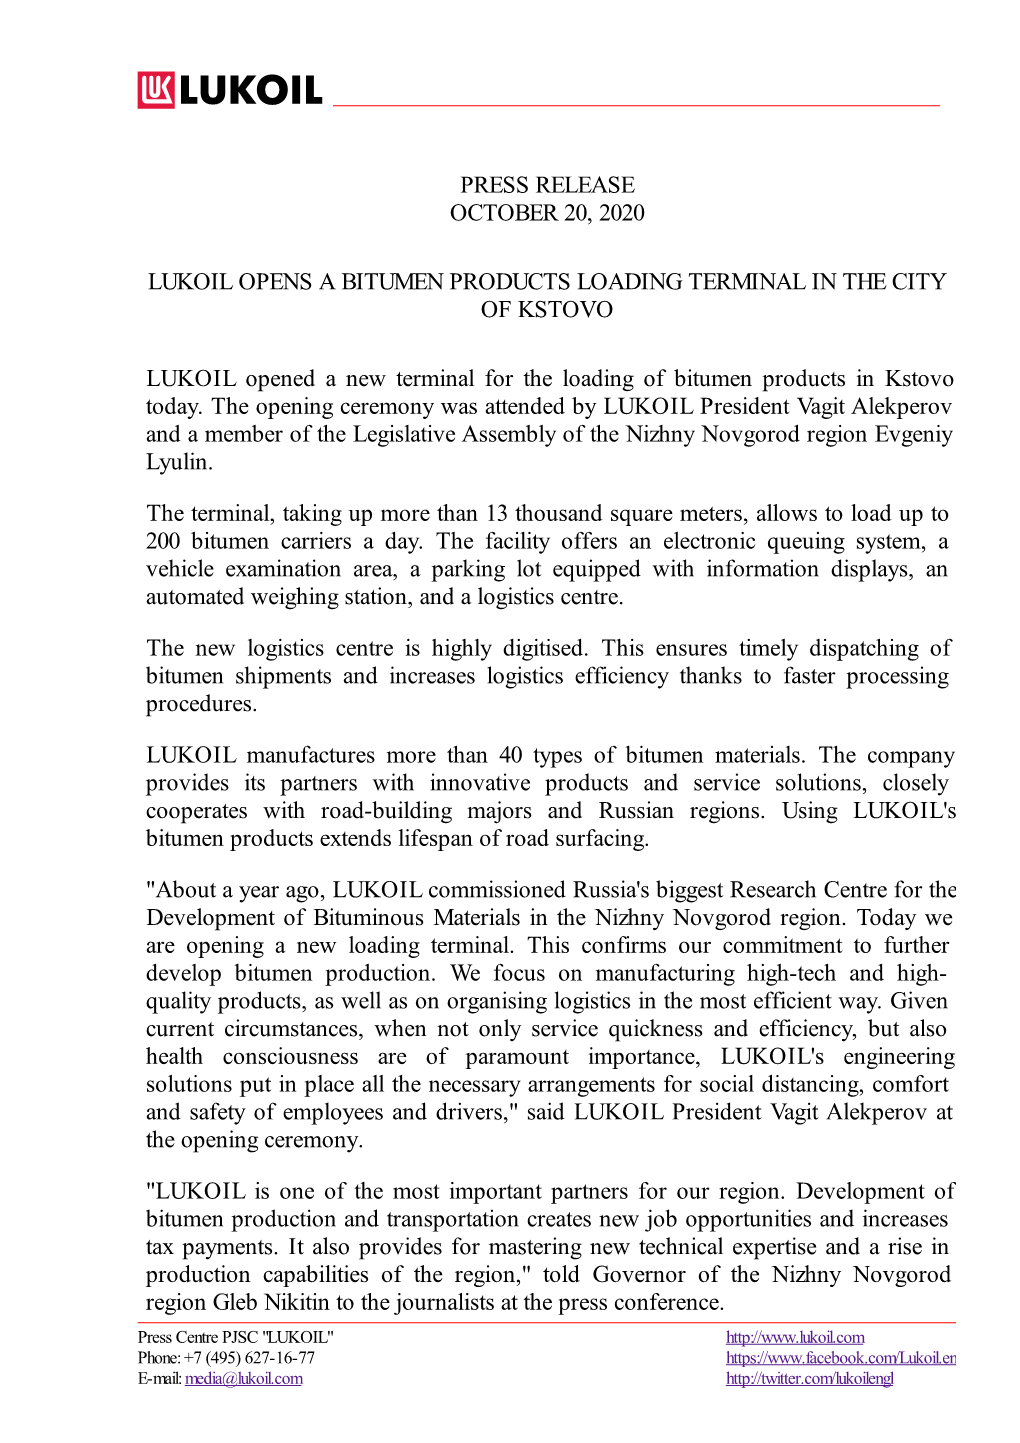 Press Release October 20, 2020 Lukoil Opens a Bitumen